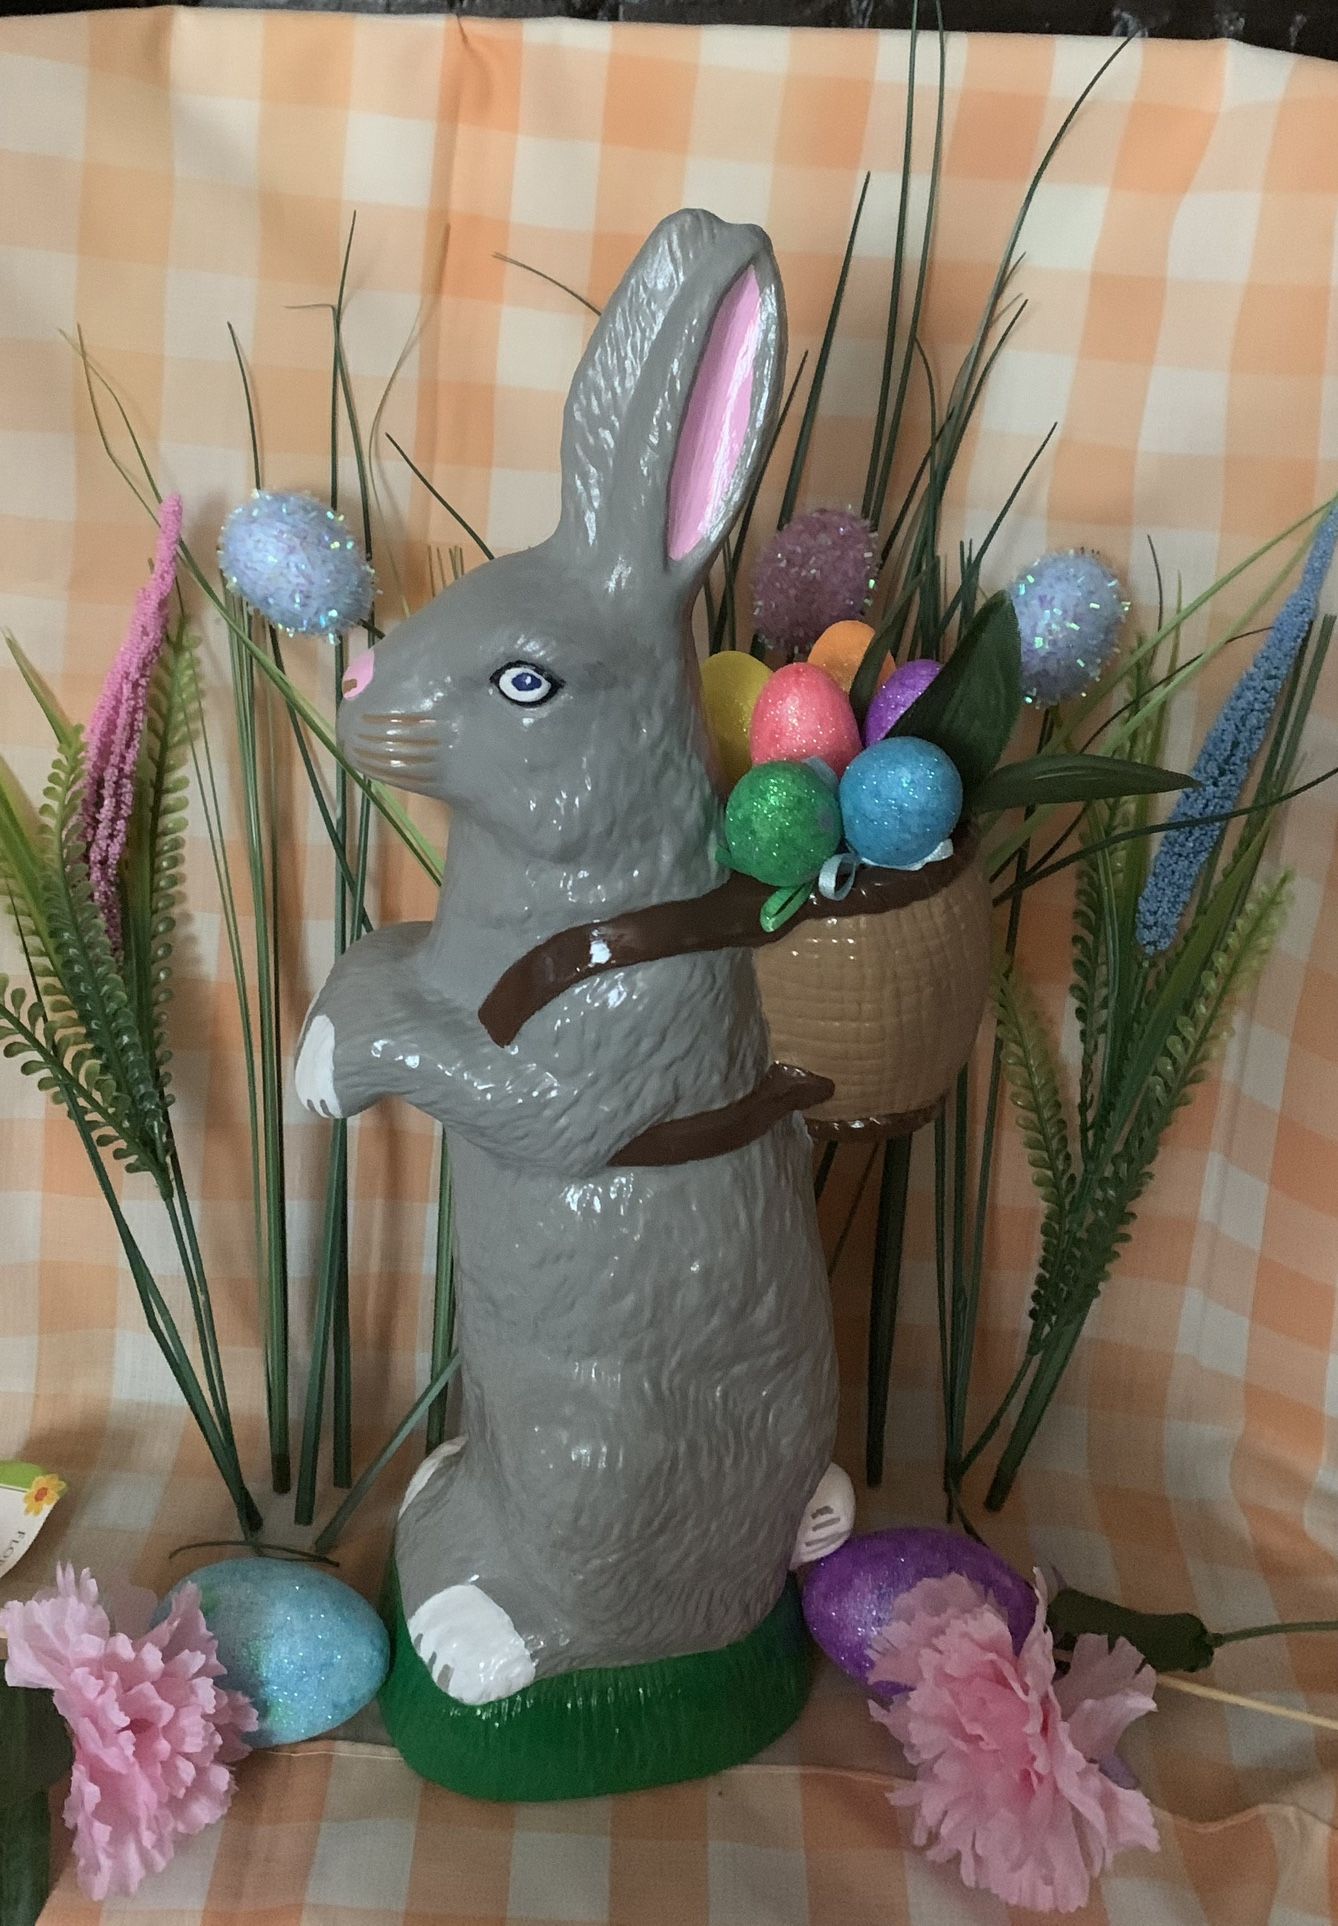 Ceramic Easter bunny